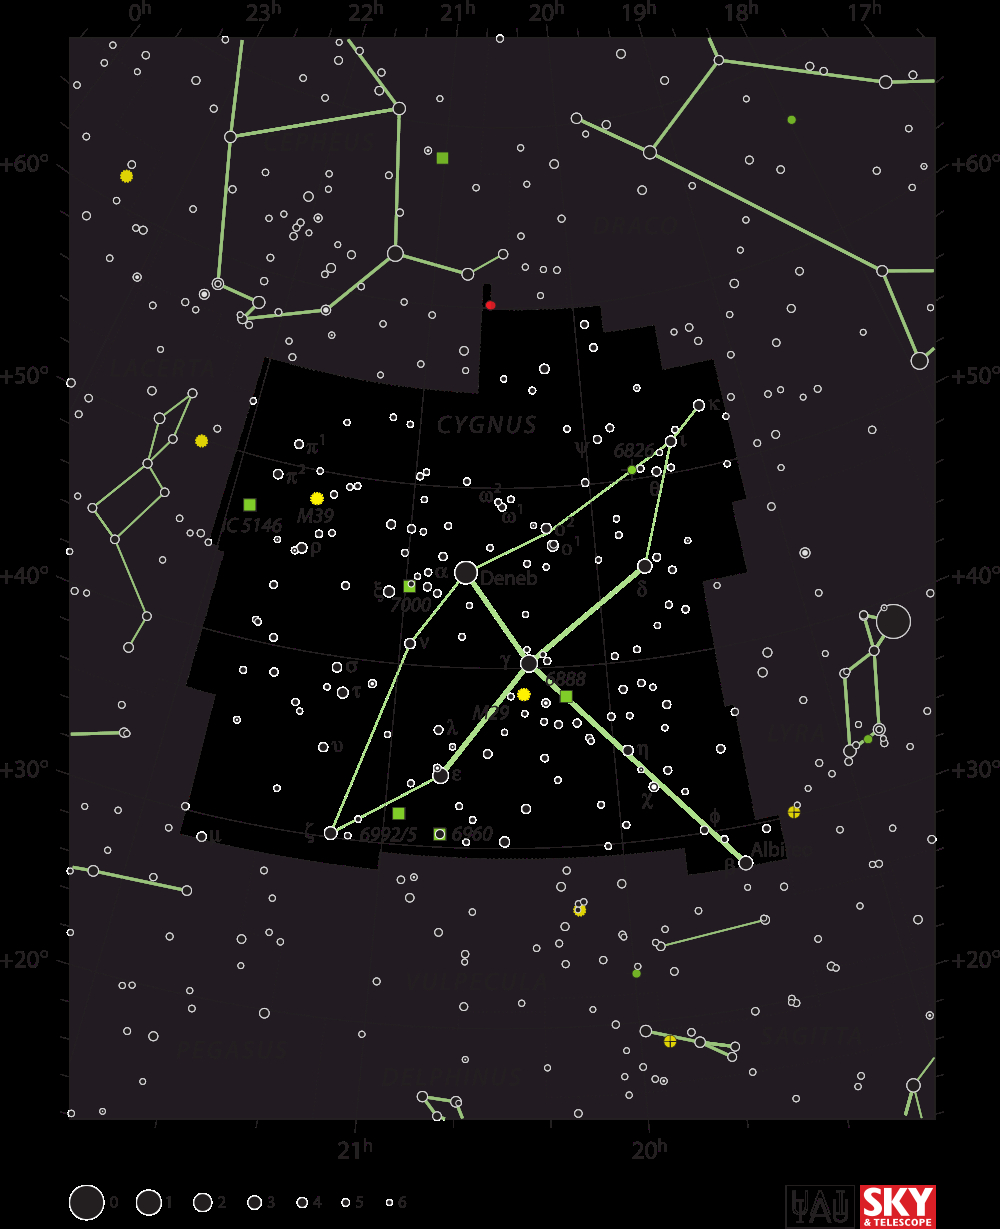 Cygnus The Constellation Directory